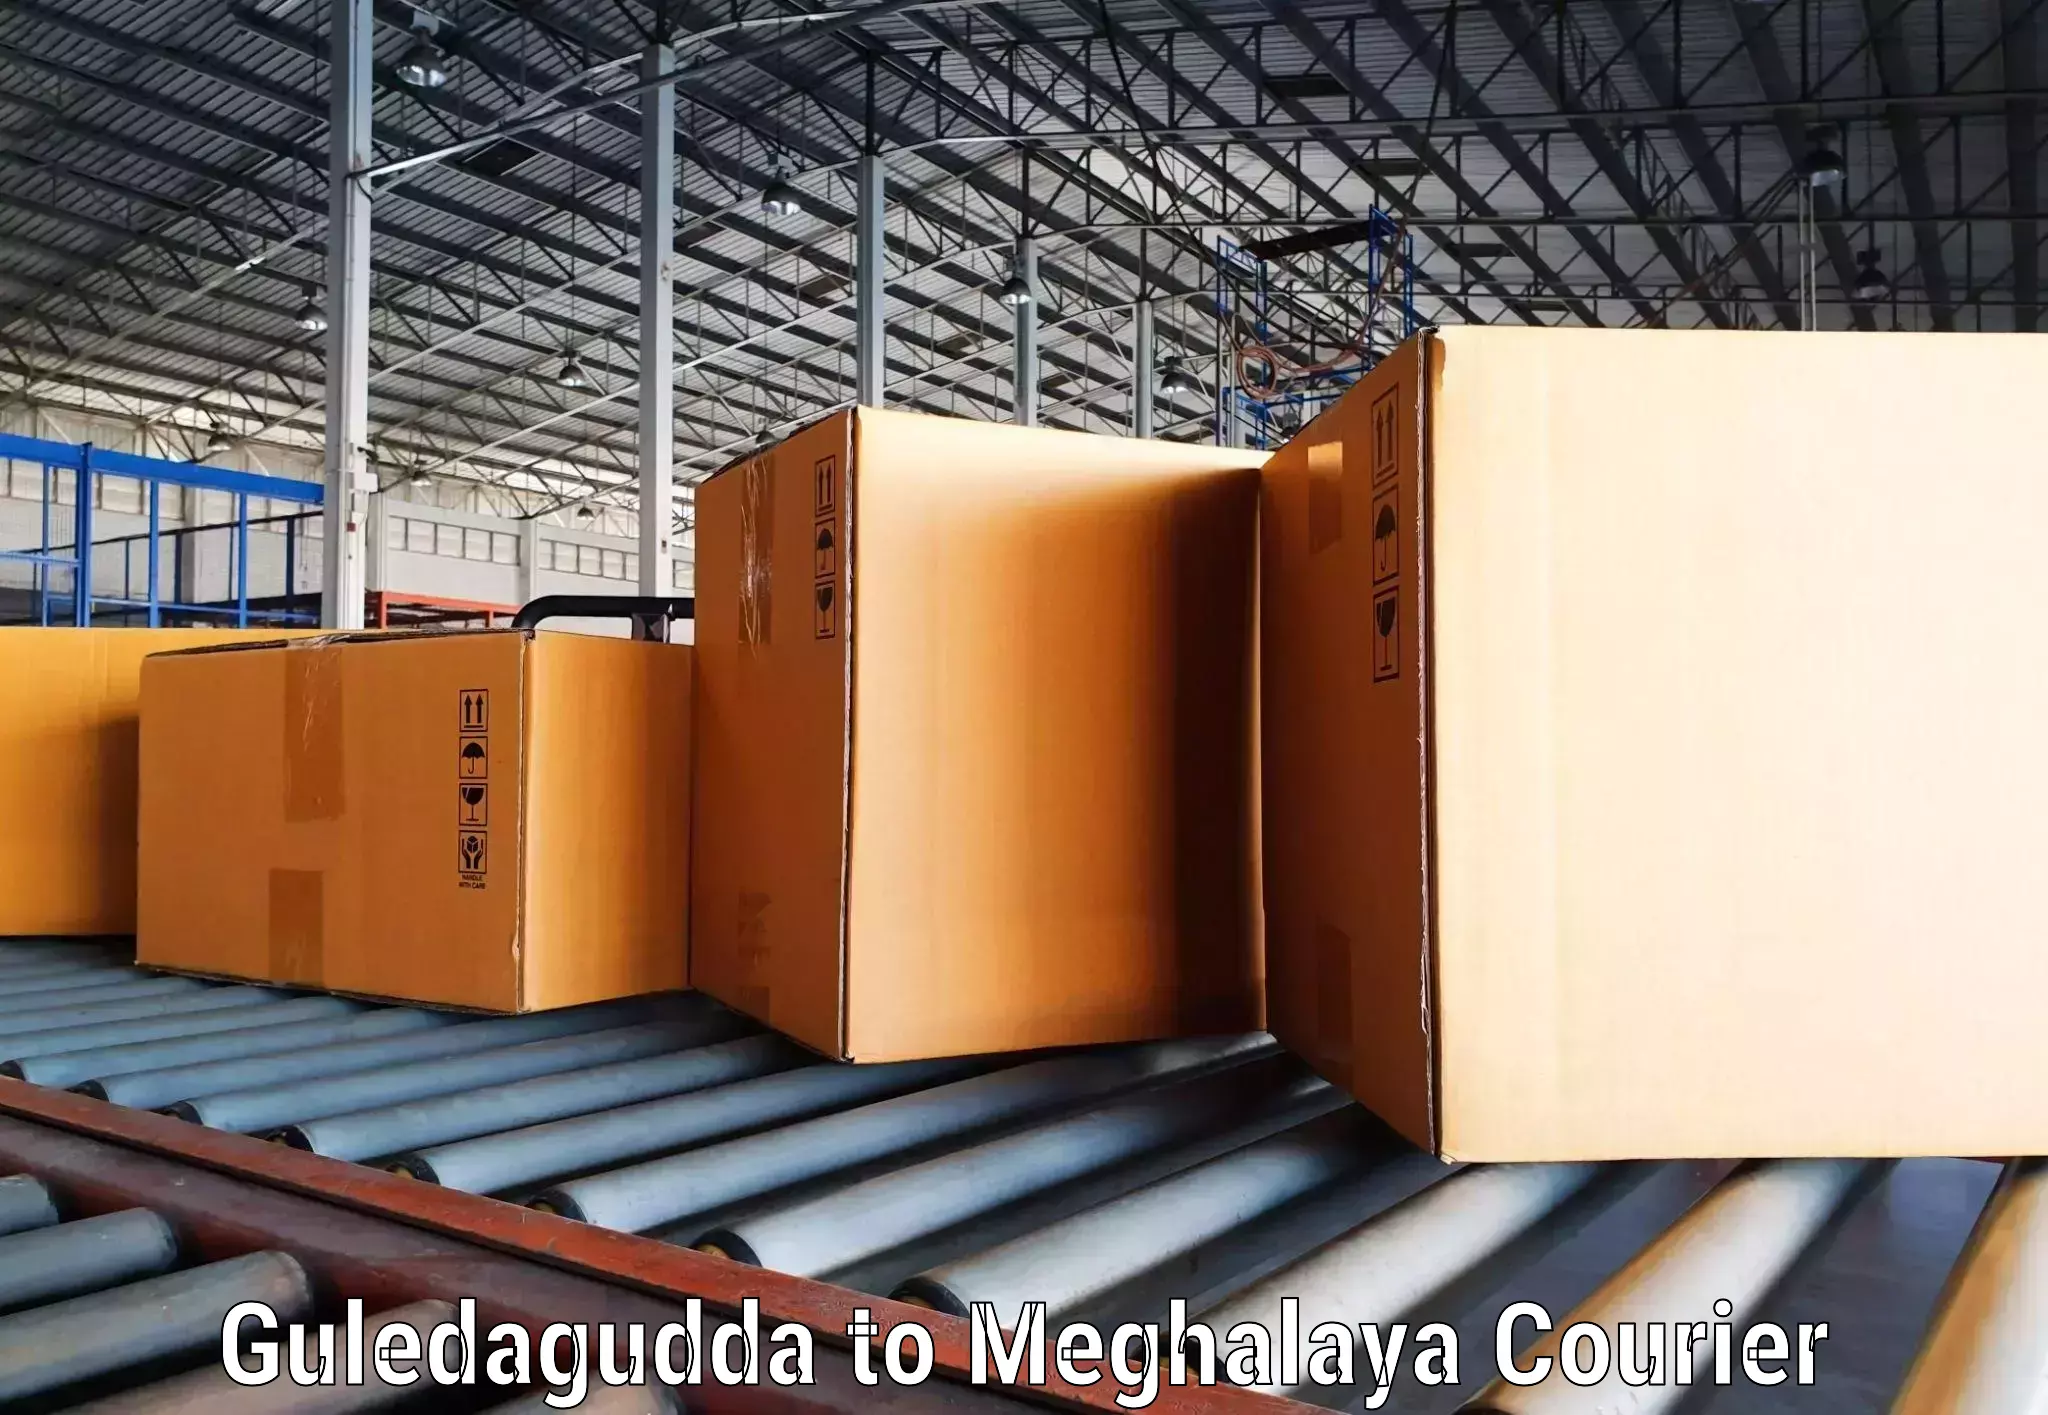 Courier service innovation Guledagudda to Meghalaya